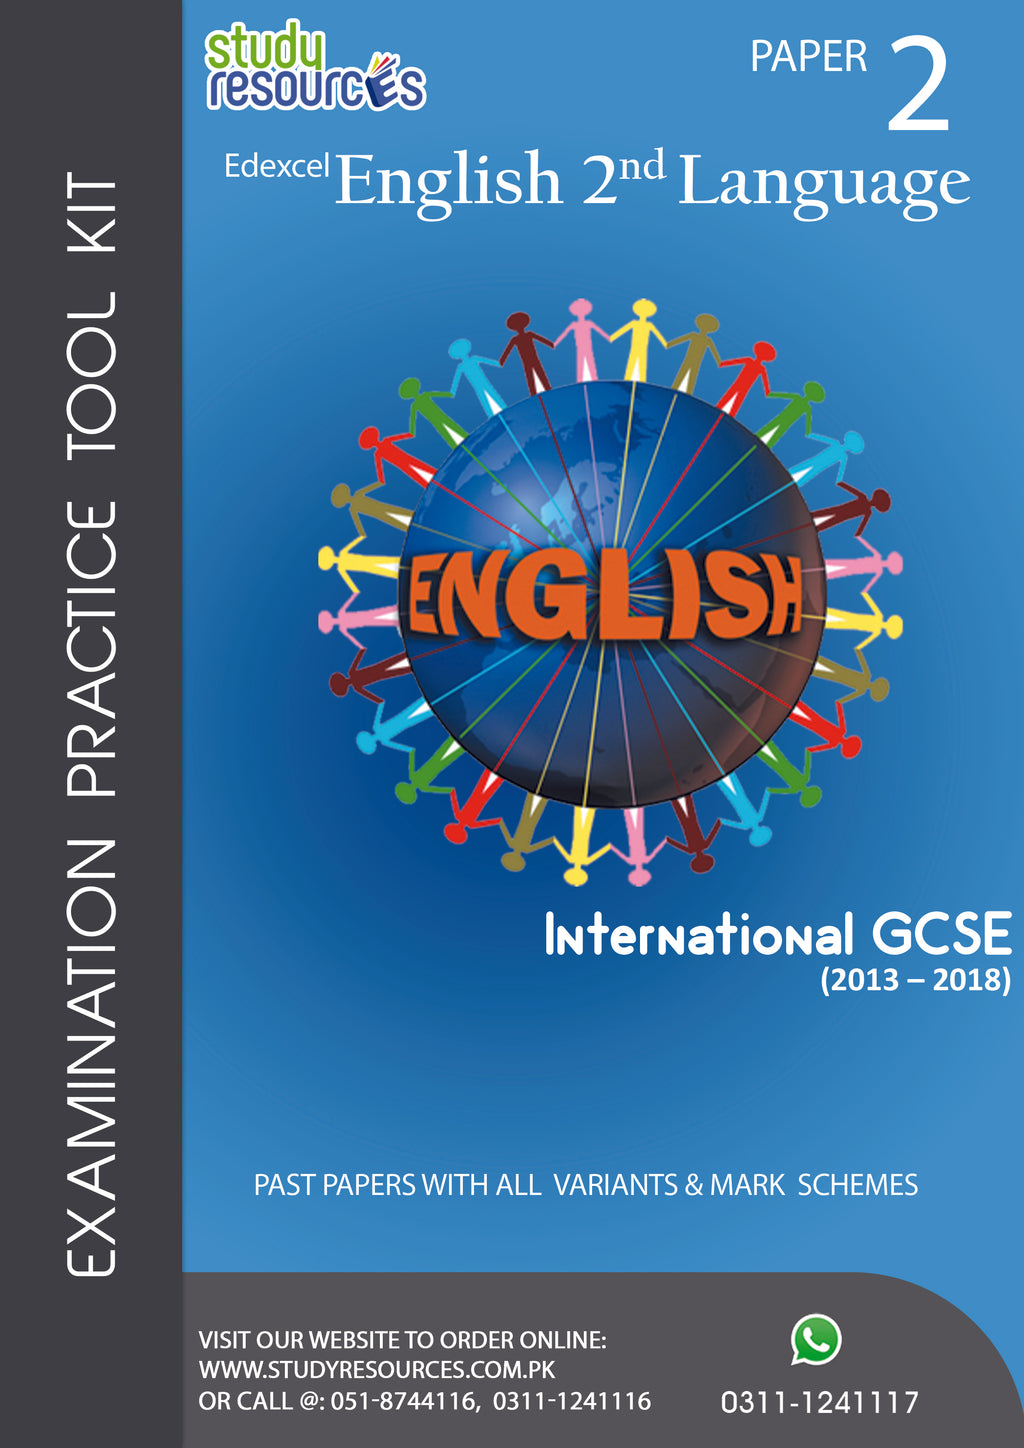 Edexcel IGCSE English 2nd Language P-2 Past Papers (2013-2018)